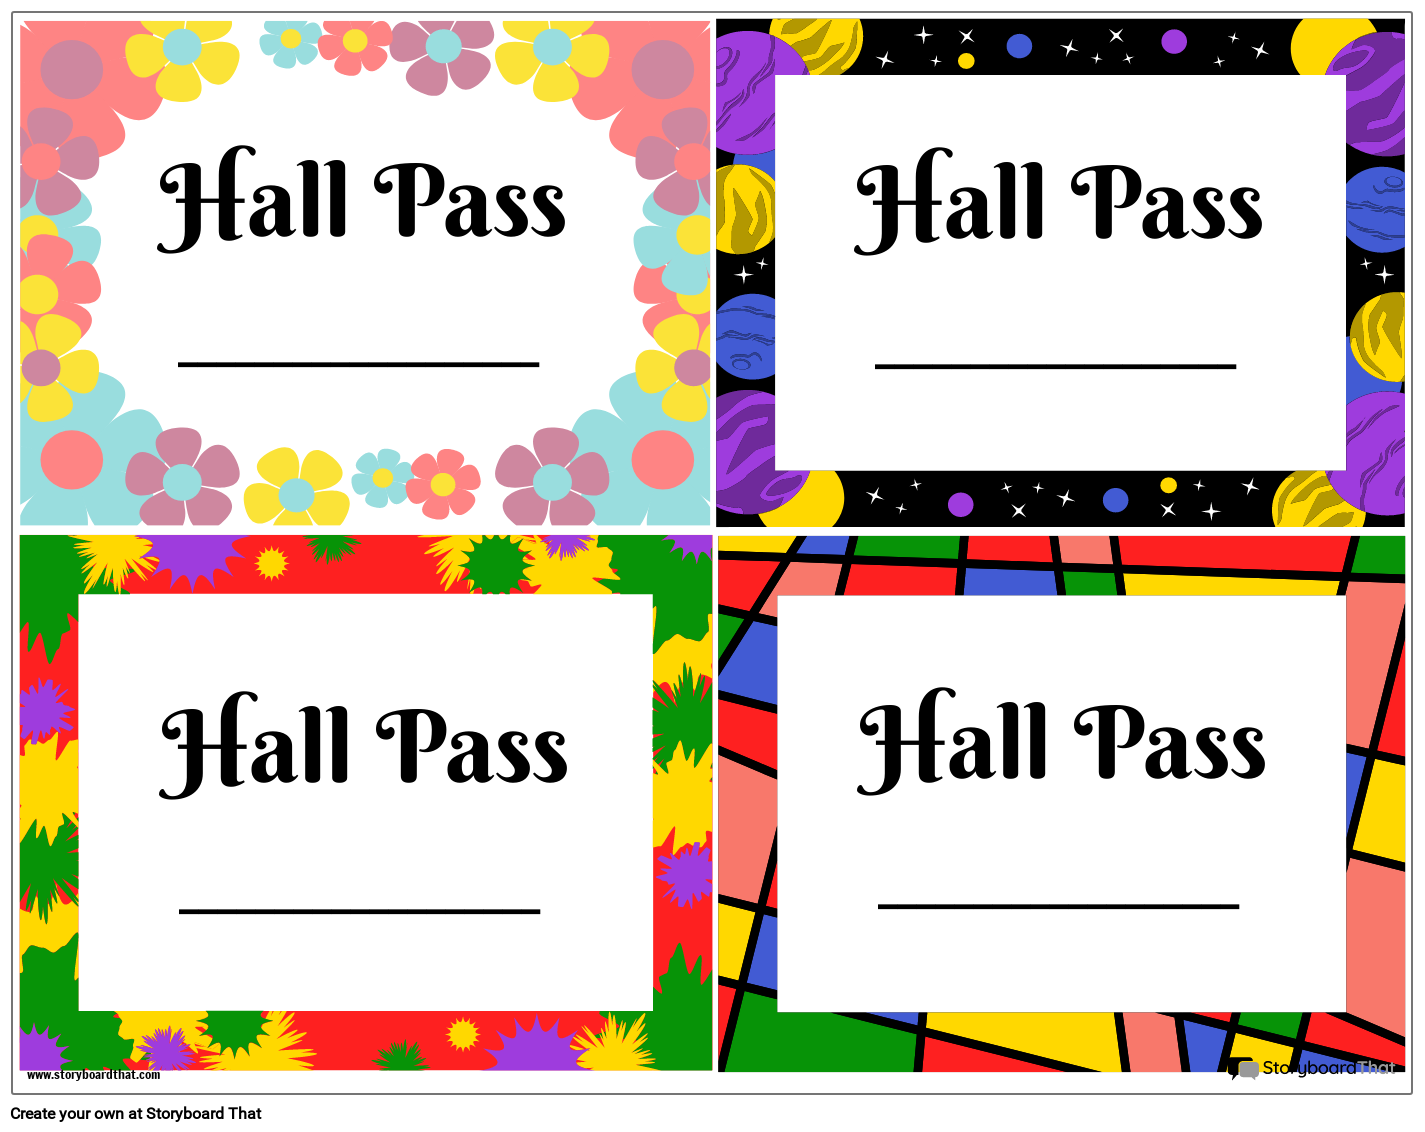 hall-pass-template-hall-pass-maker-storyboardthat